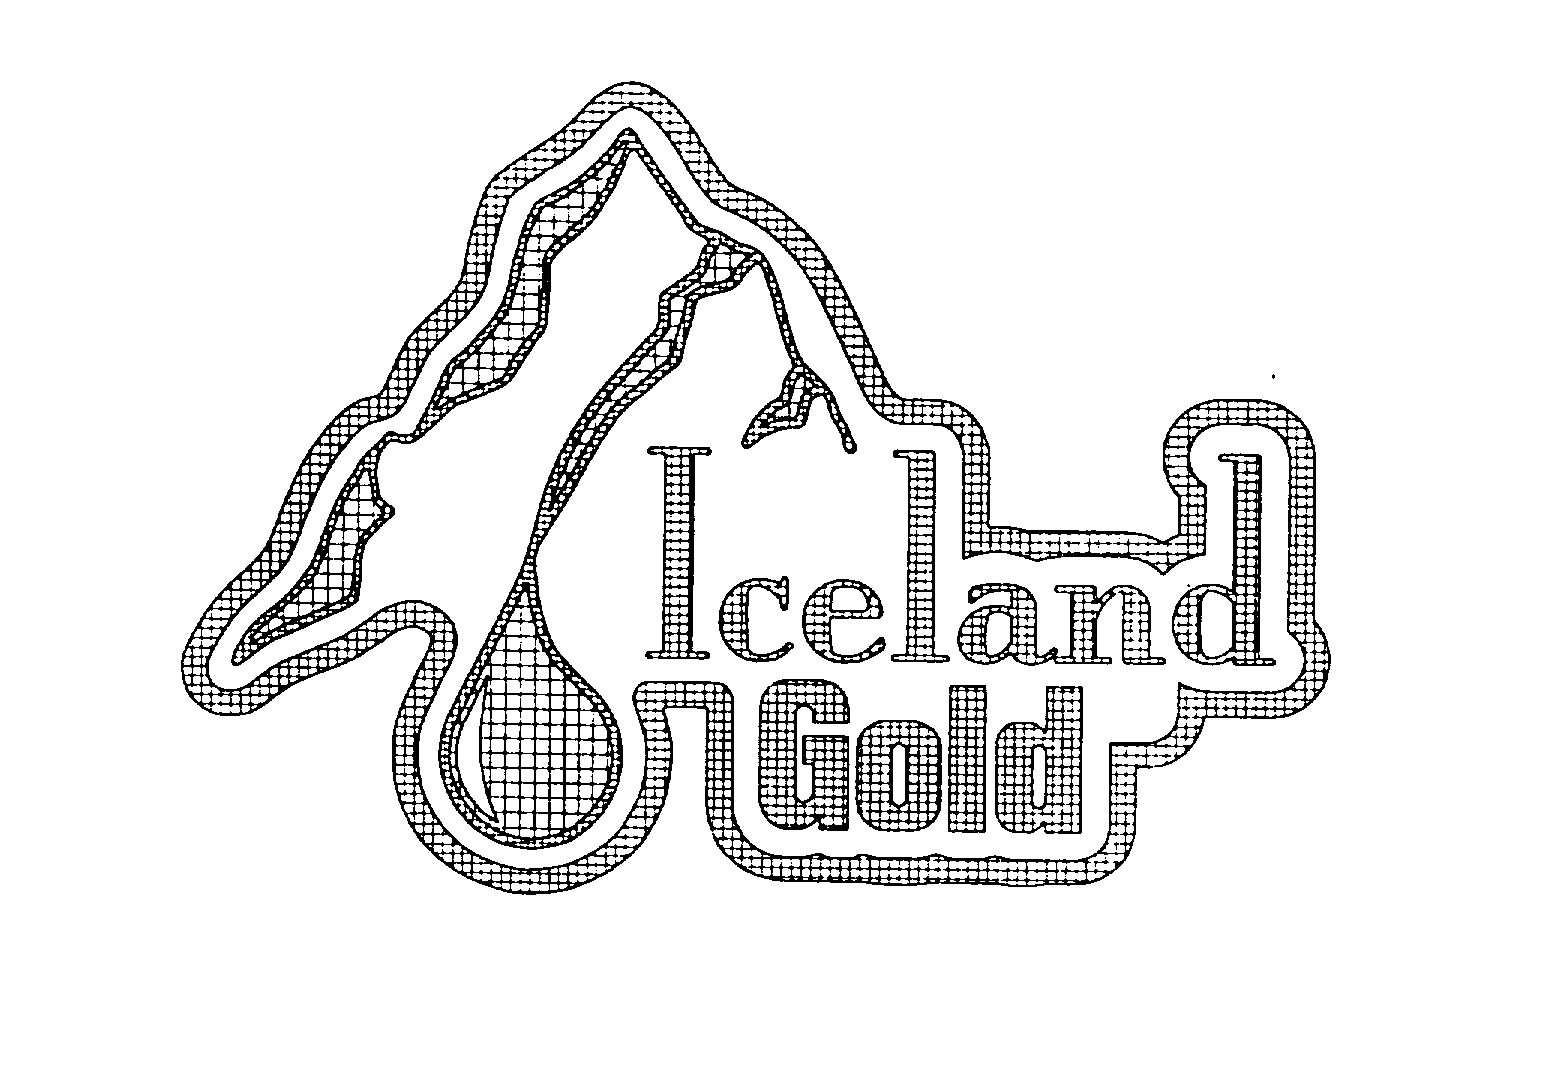 ICELAND GOLD